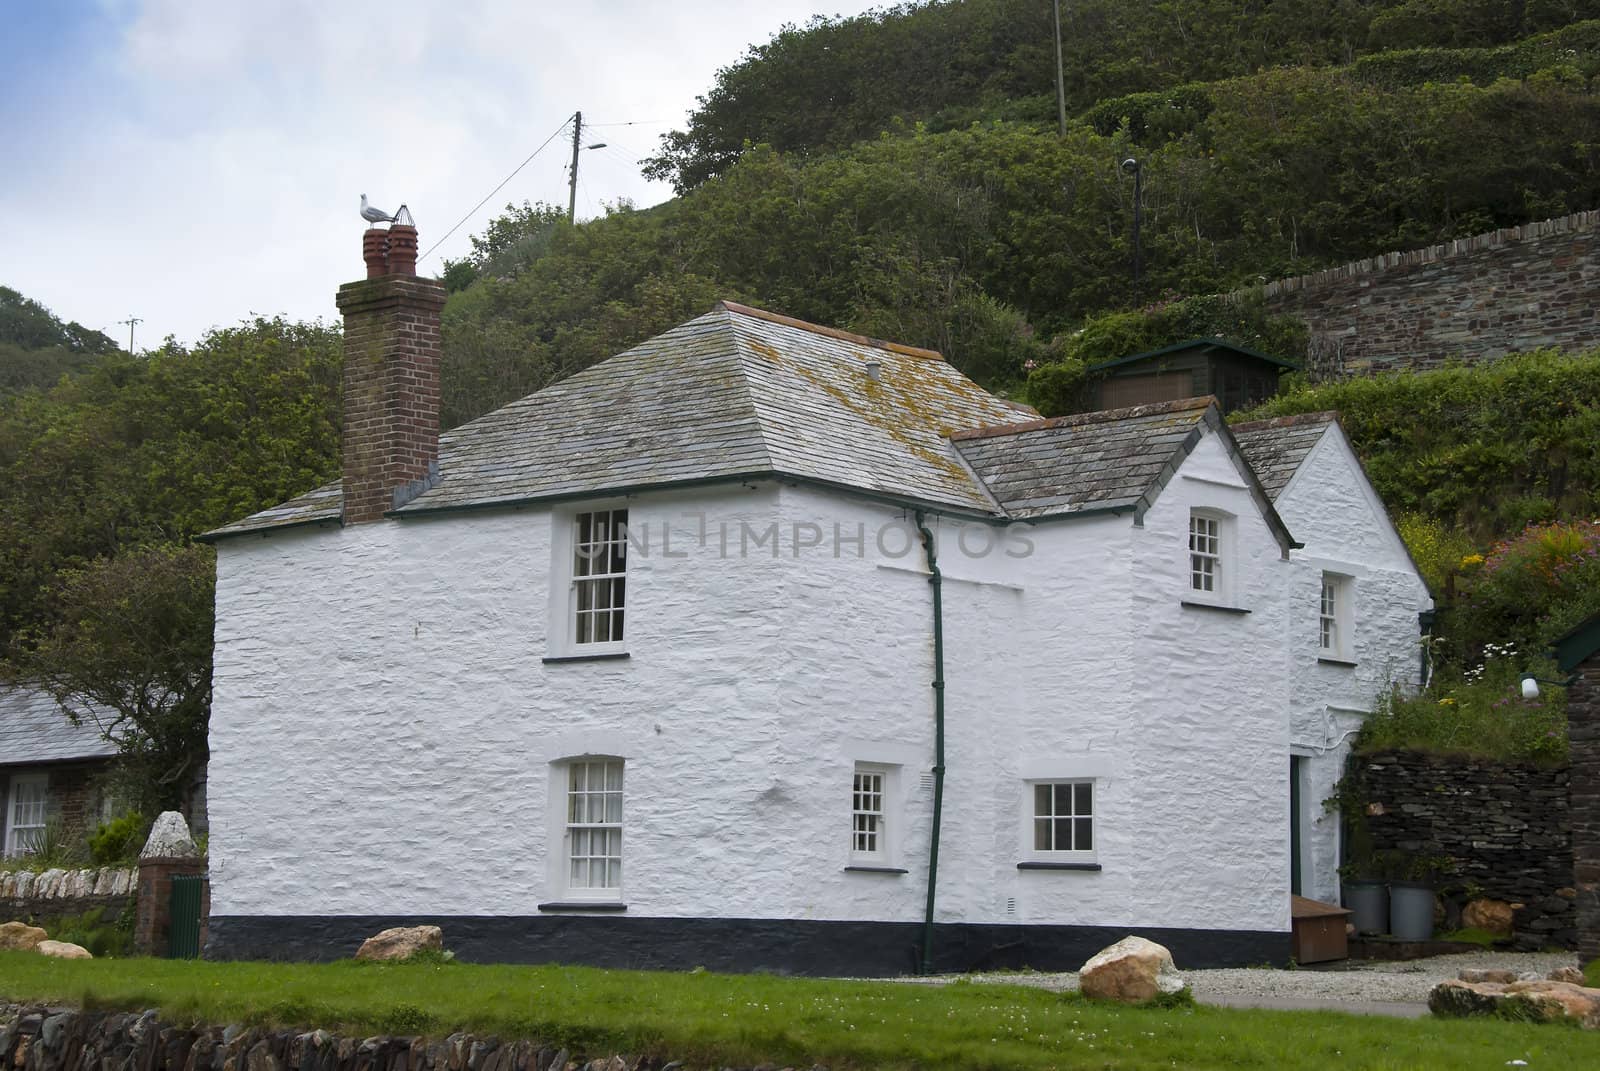 Cornish Cottage by d40xboy